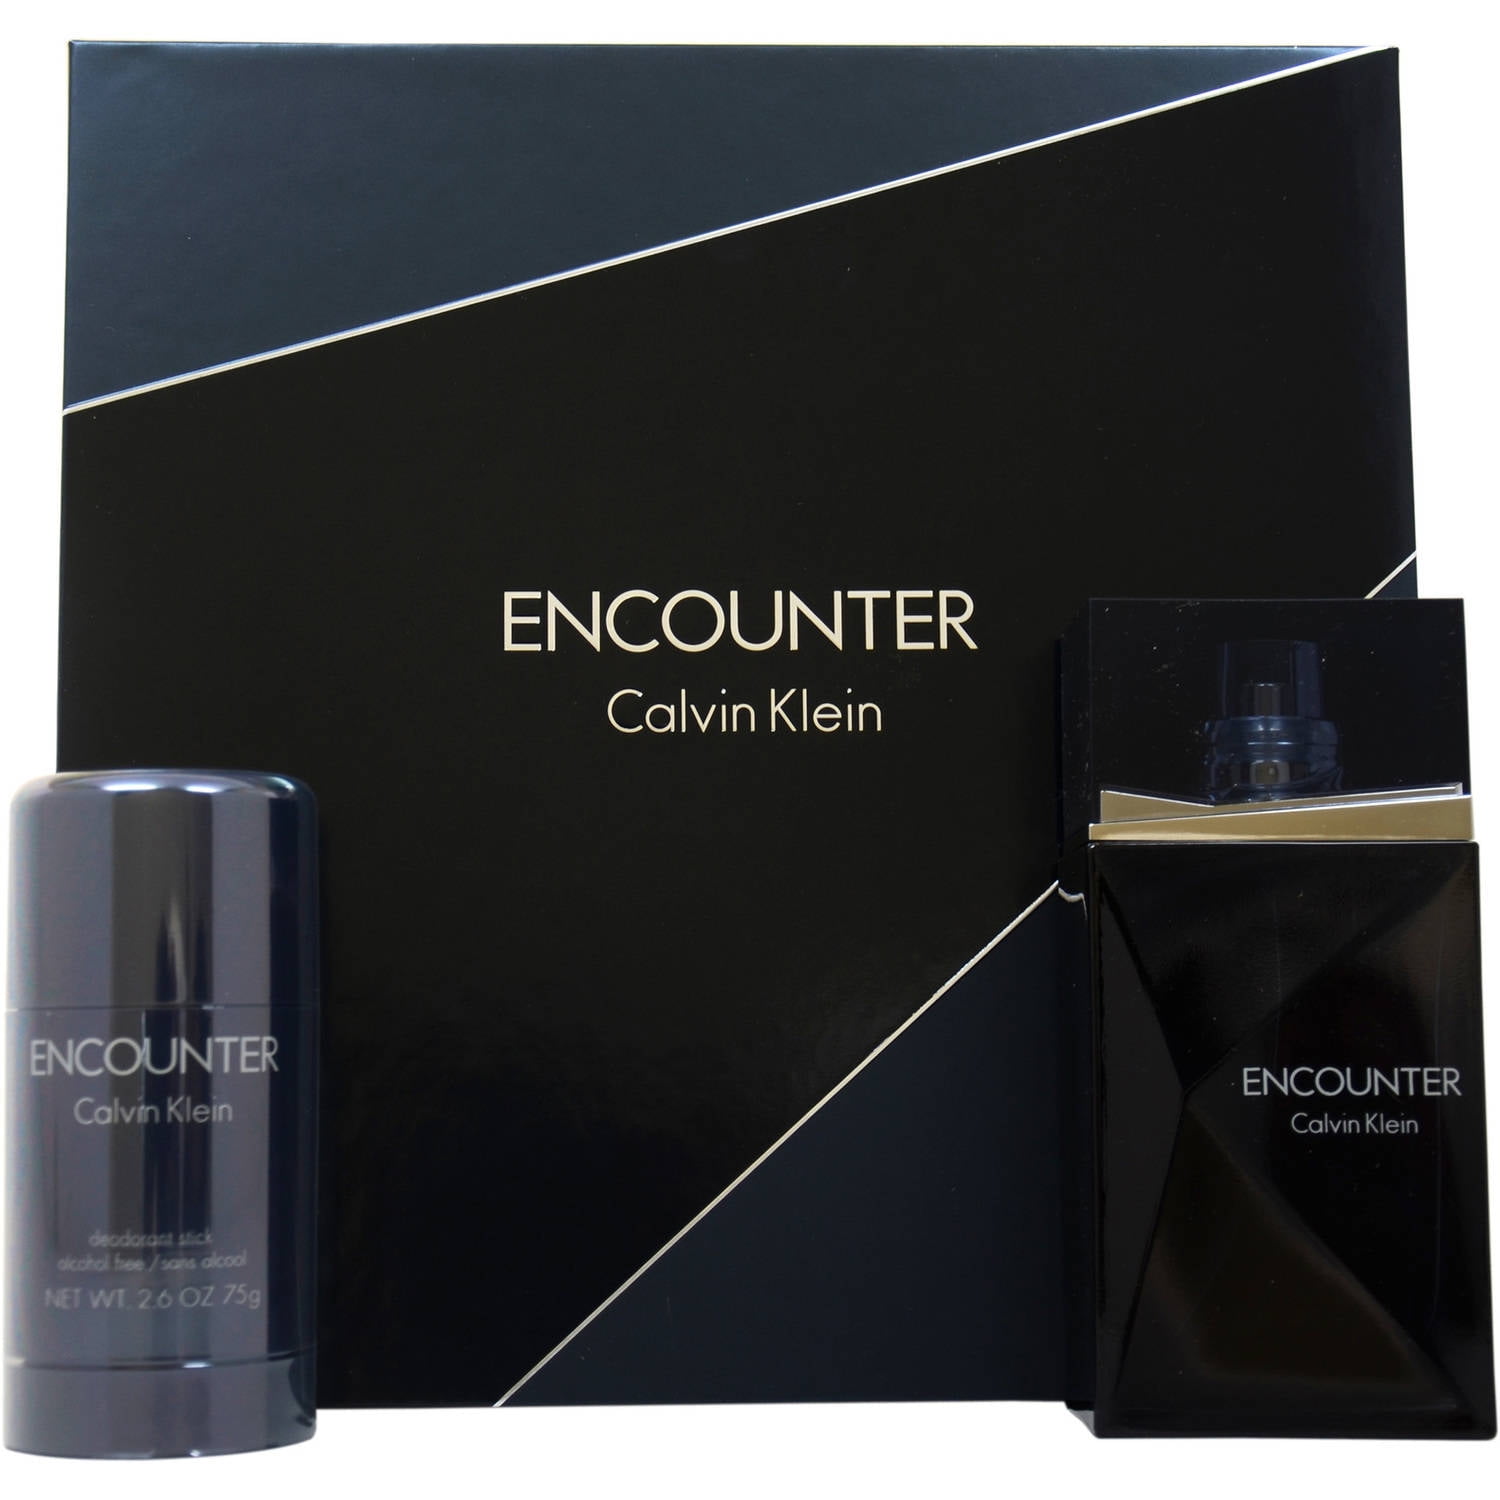 ENCOUNTER MEN 1.7 OZ EAU TOILETTE SPRAY BOX by CALVIN KLEIN -